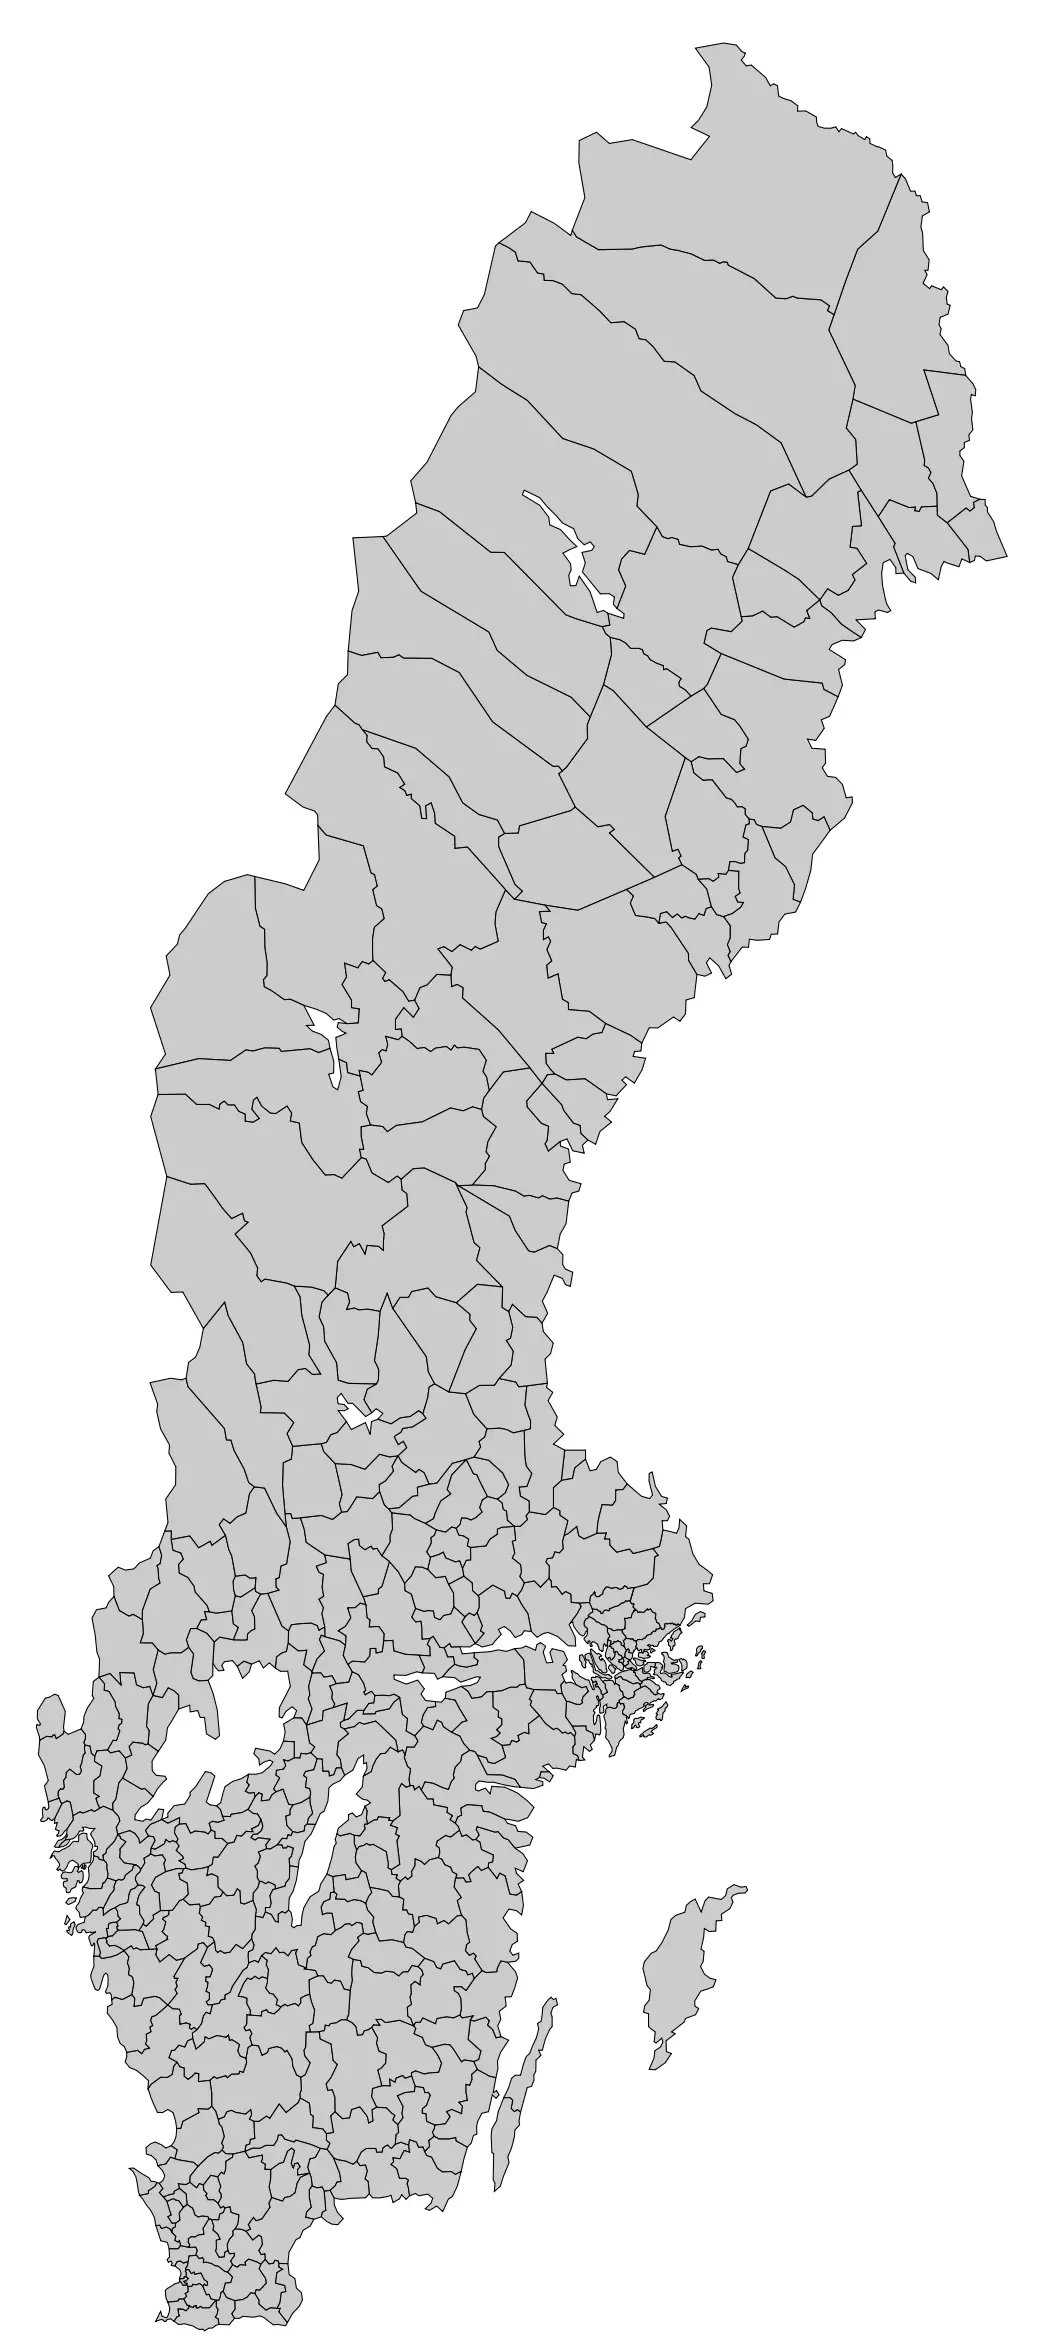 Sweden Blank Map With Municipal Borders - Mapsof.Net